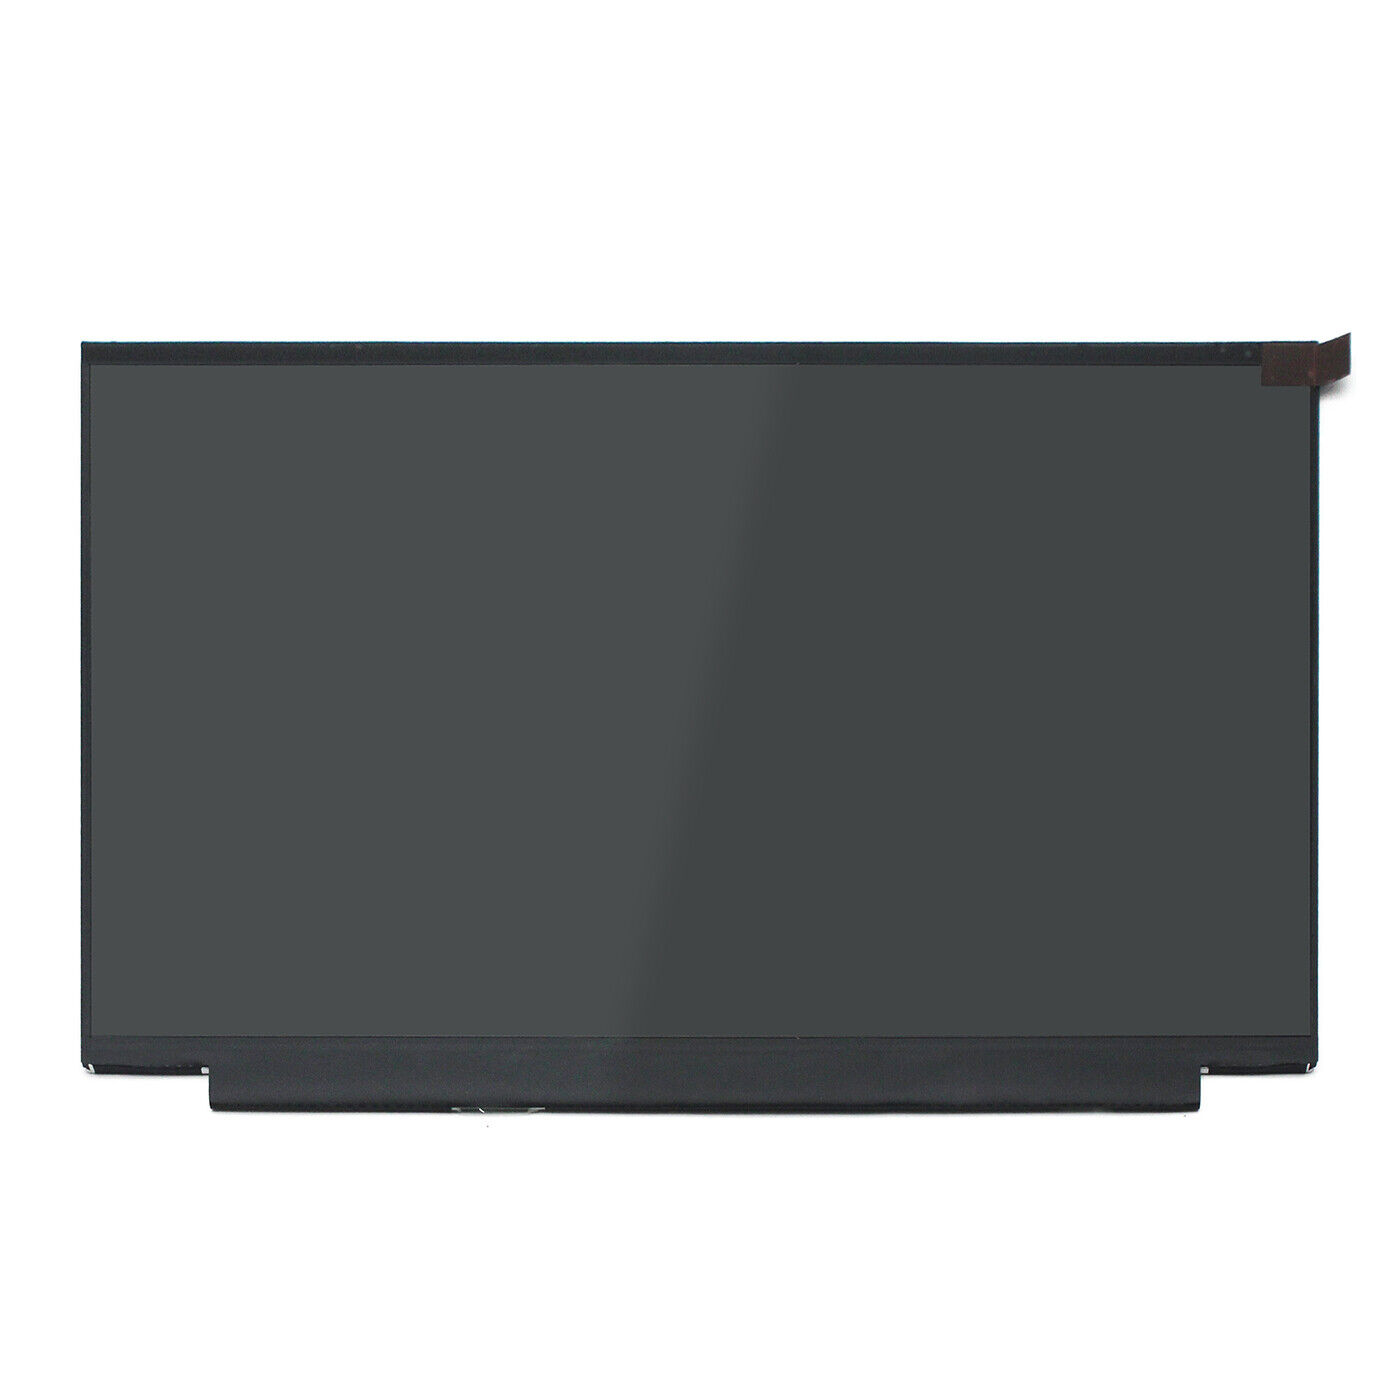 15.6''LCD Screen for Lenovo IdeaPad S340-15IILD S340-15IIL S340-15IML S340-15API